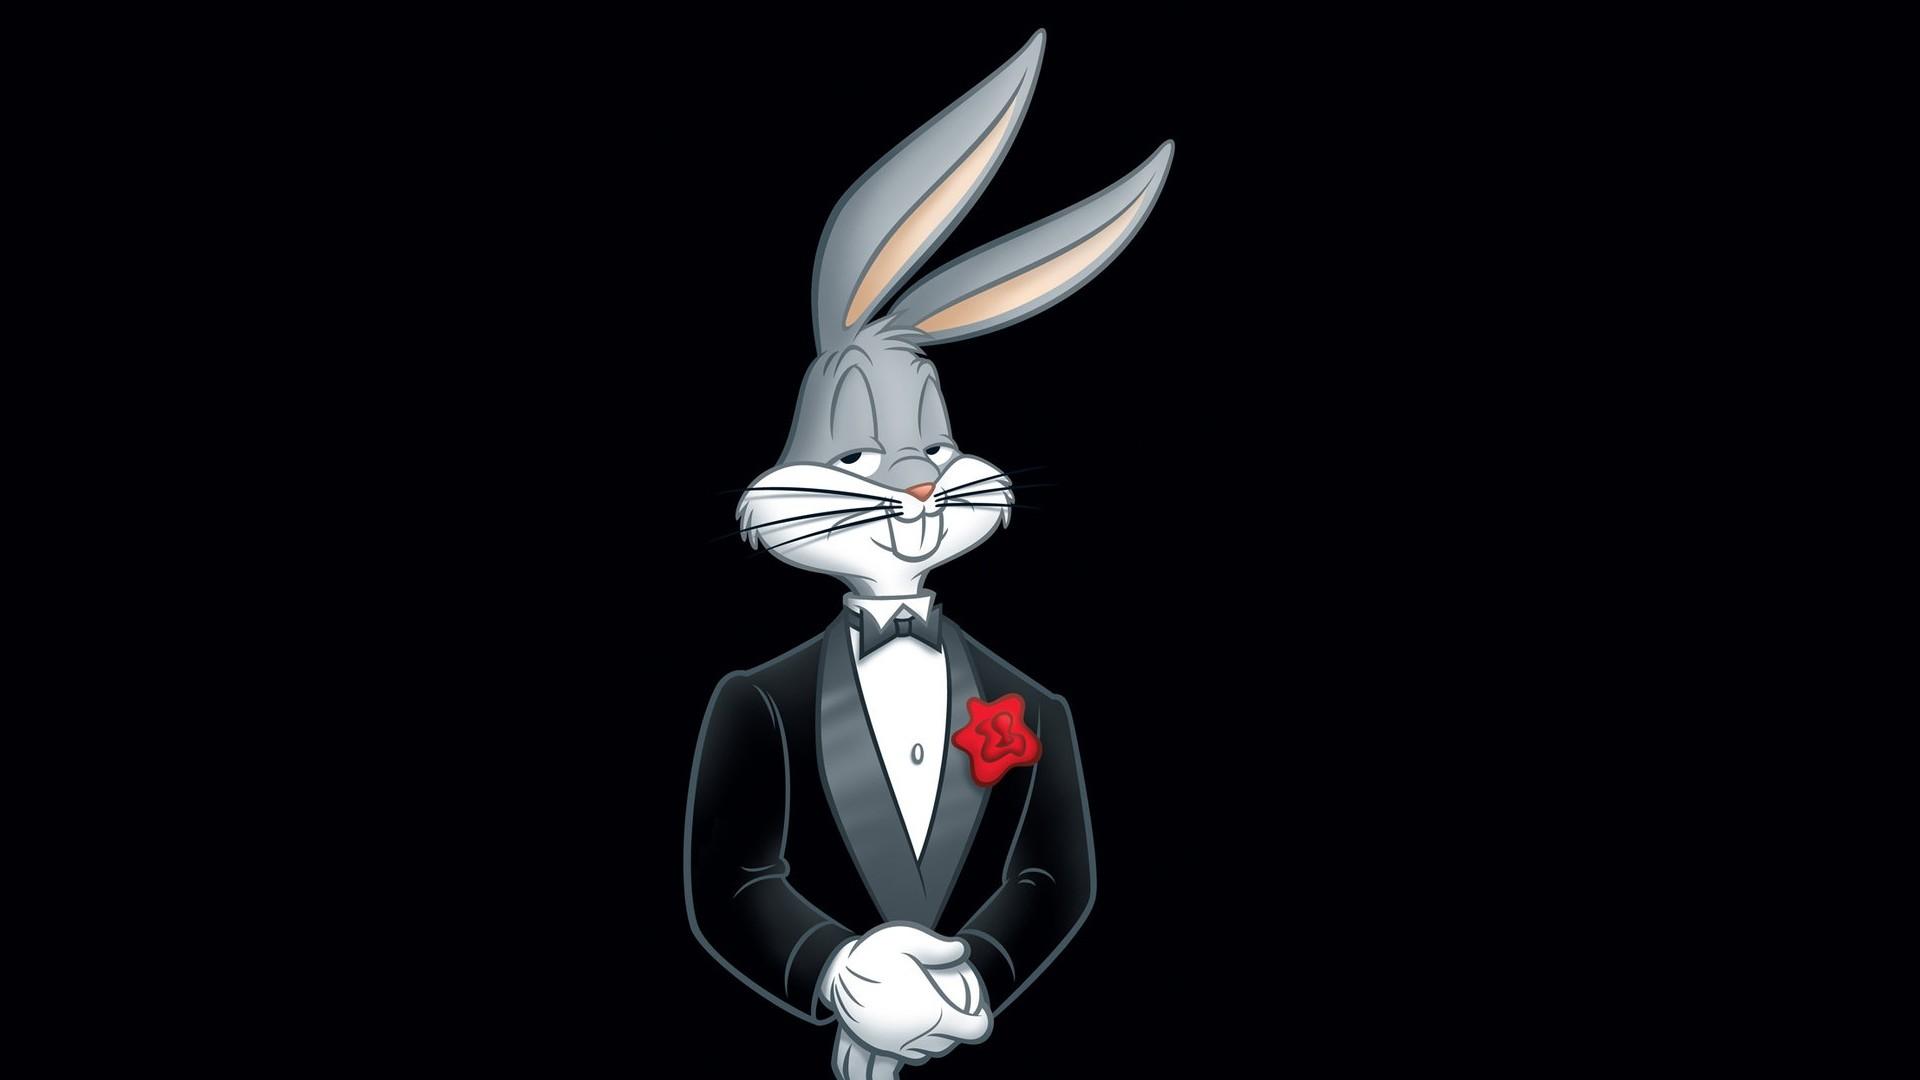 26+] Bugs Bunny Cartoon Wallpapers - WallpaperSafari